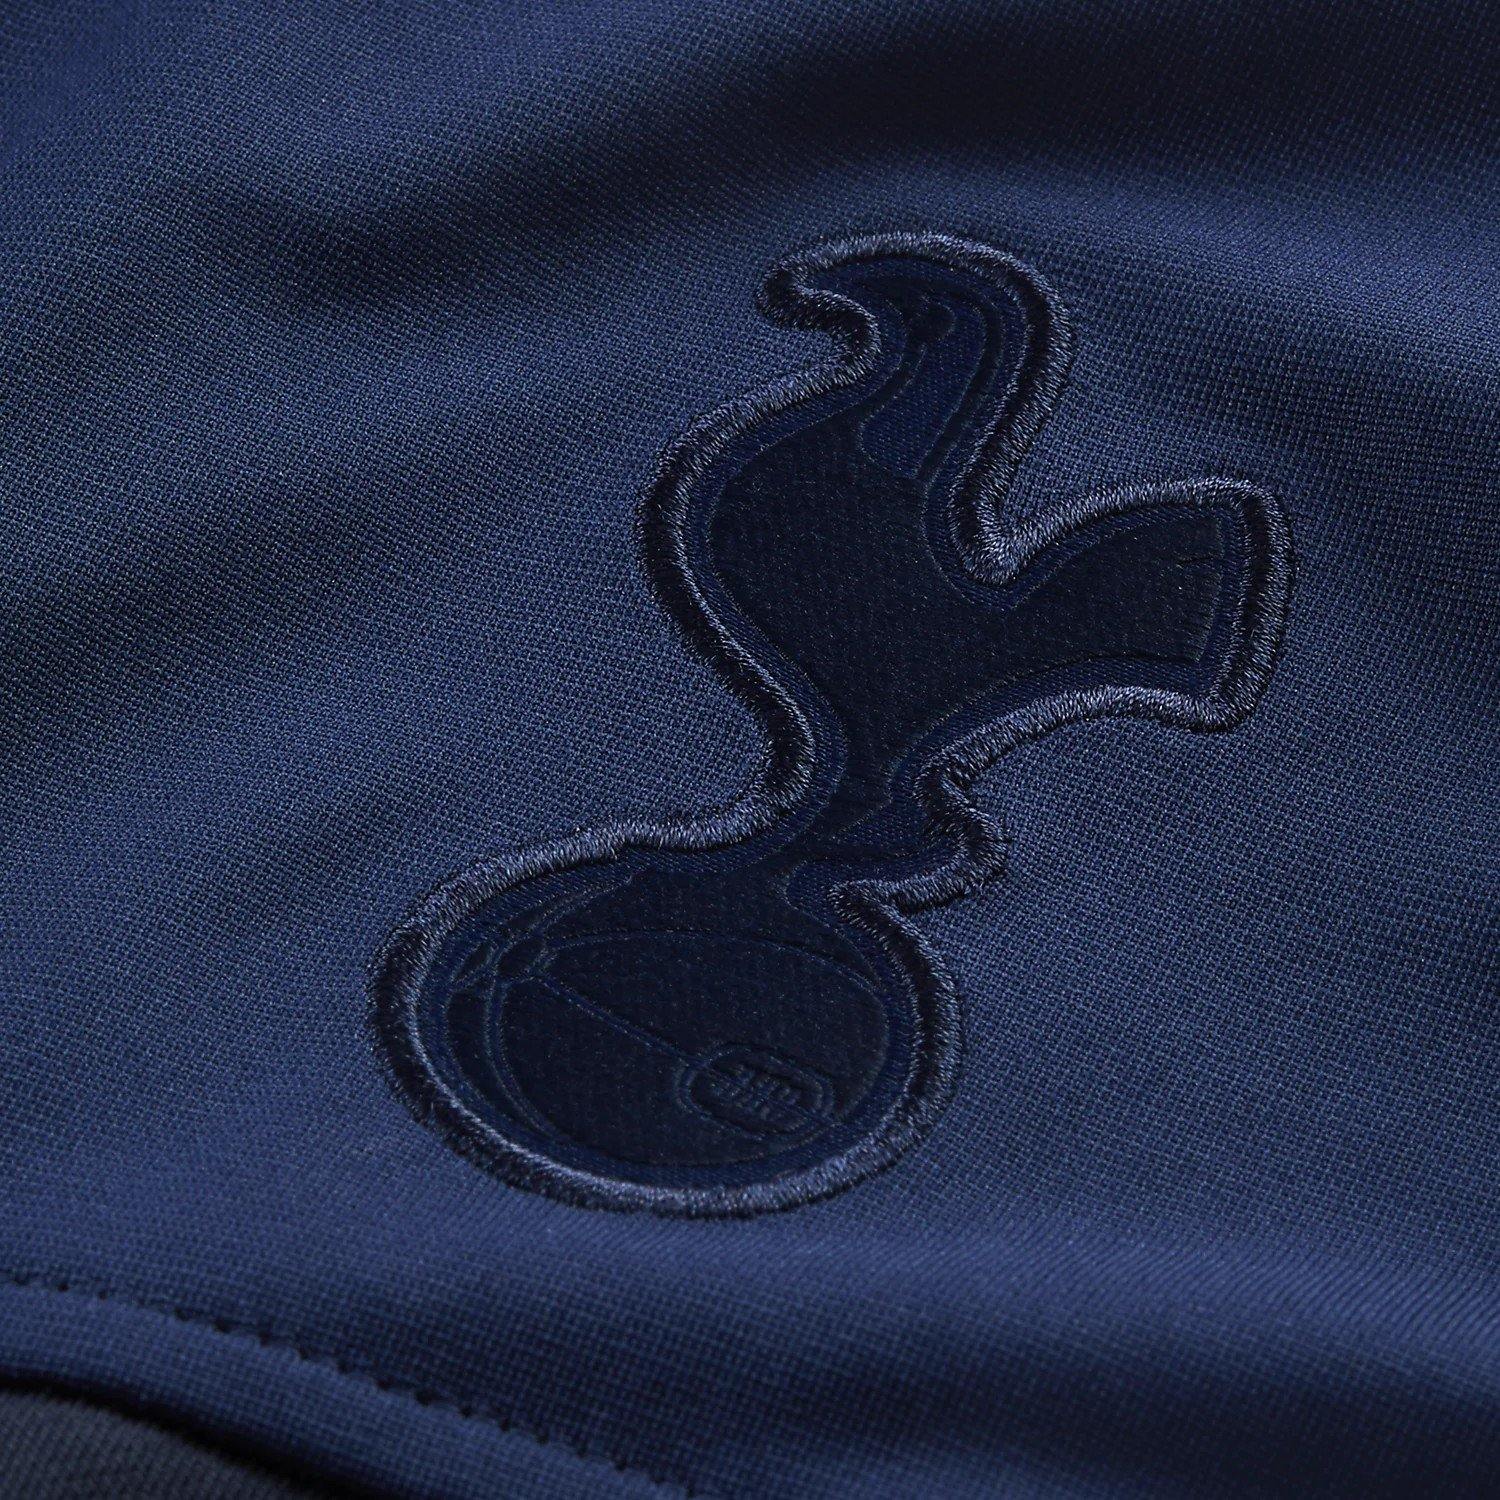 Tottenham Hotspur soccer presentation tracksuit 2020/21 - Nike –